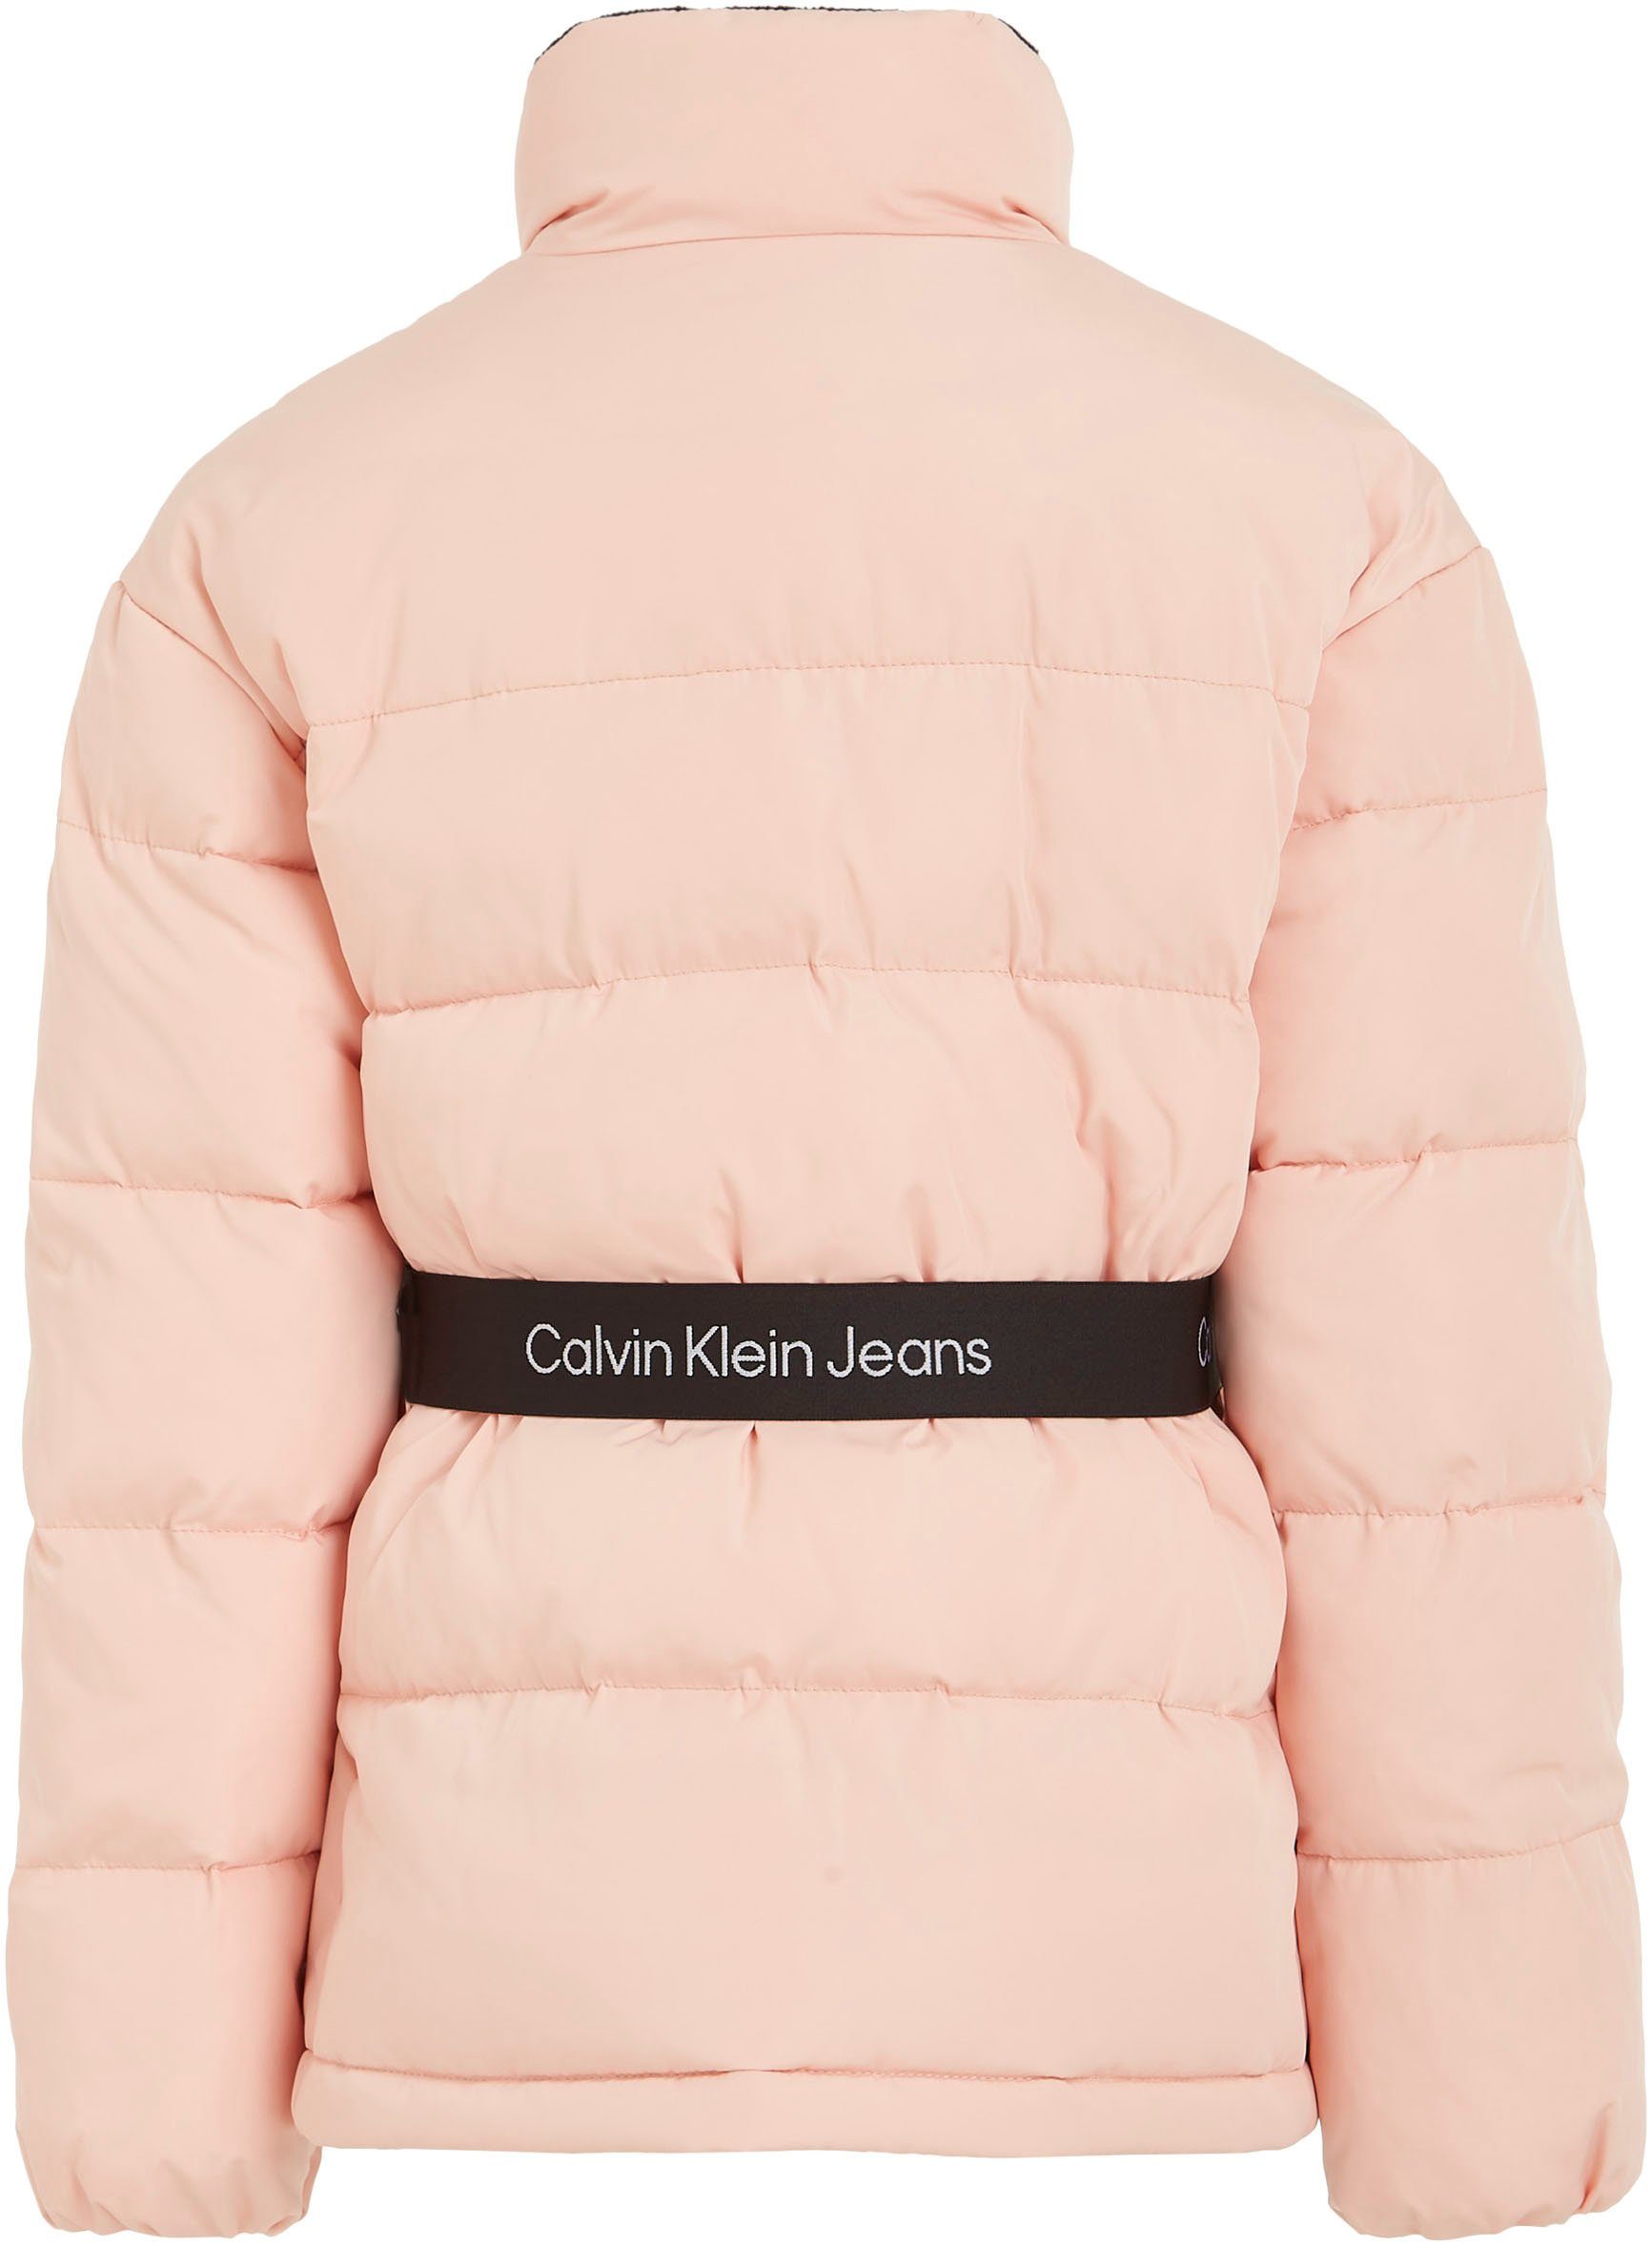 Calvin Klein Blossom TAPE LOGO BELT Faint JACKET Jeans Winterjacke